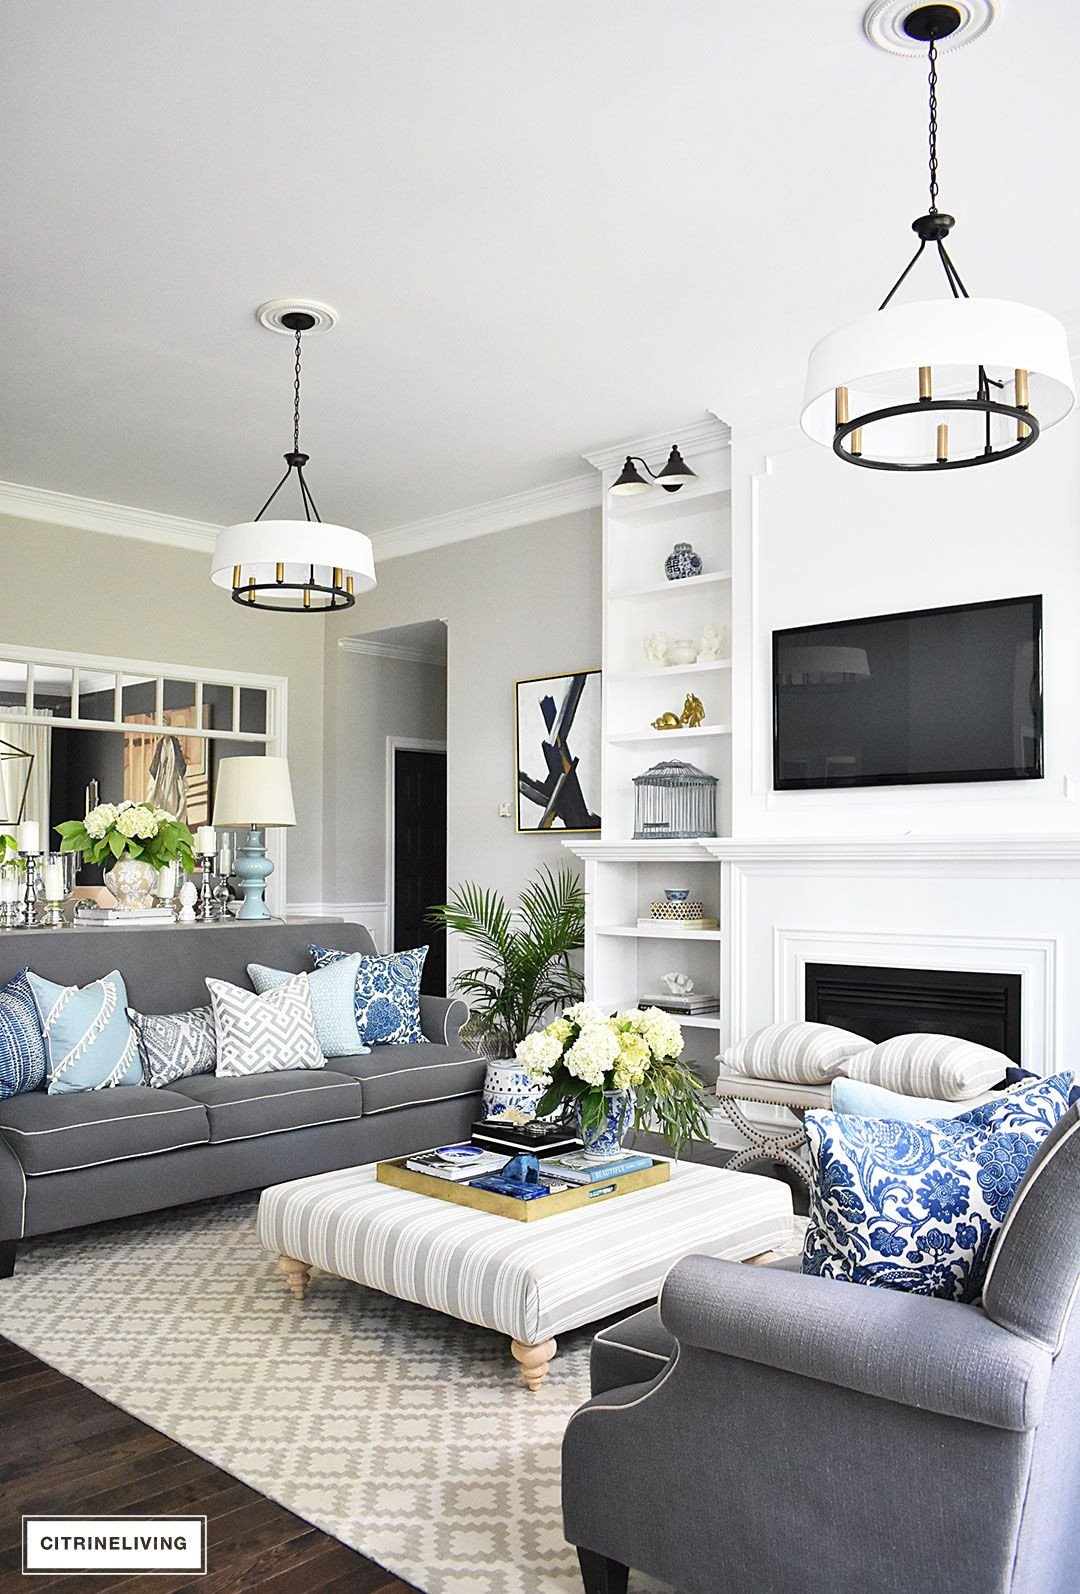 Blue and White Room Decor Elegant 20 Fresh Ideas for Decorating with Blue and White Blue and White